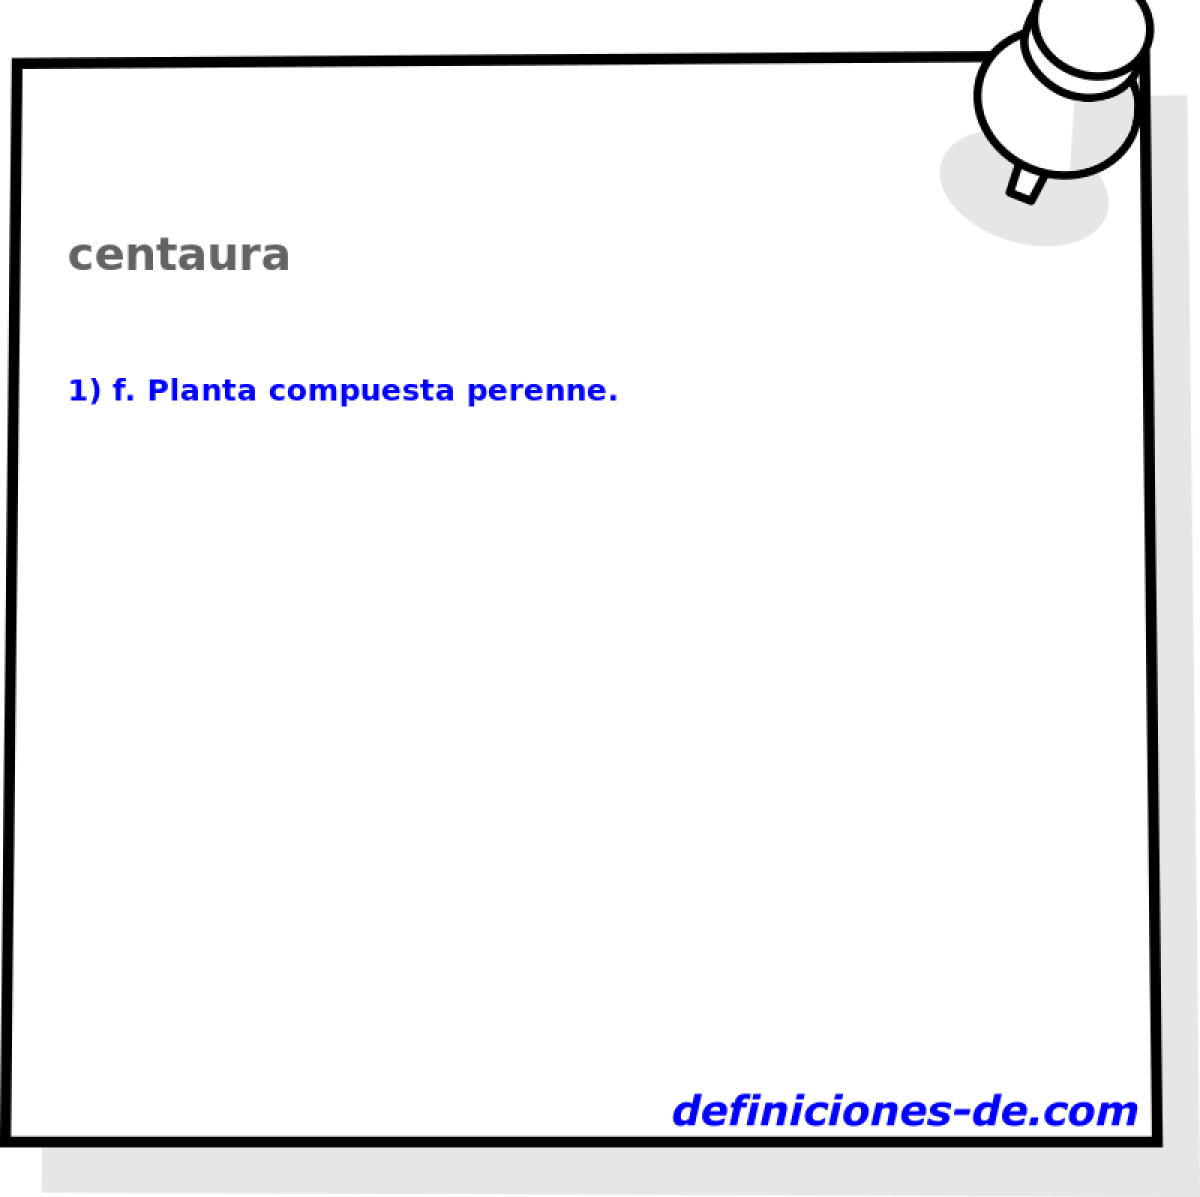 centaura 